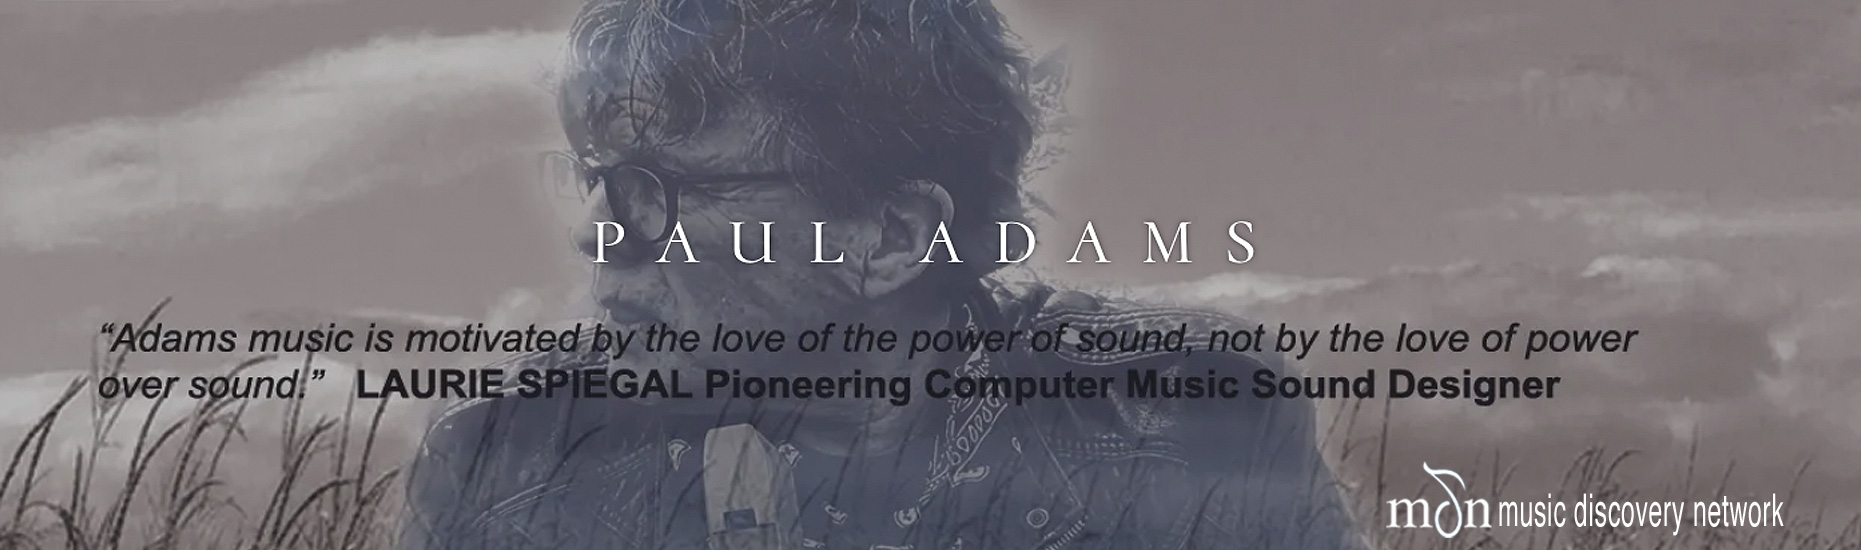 Paul Adams - Music Discovery Network